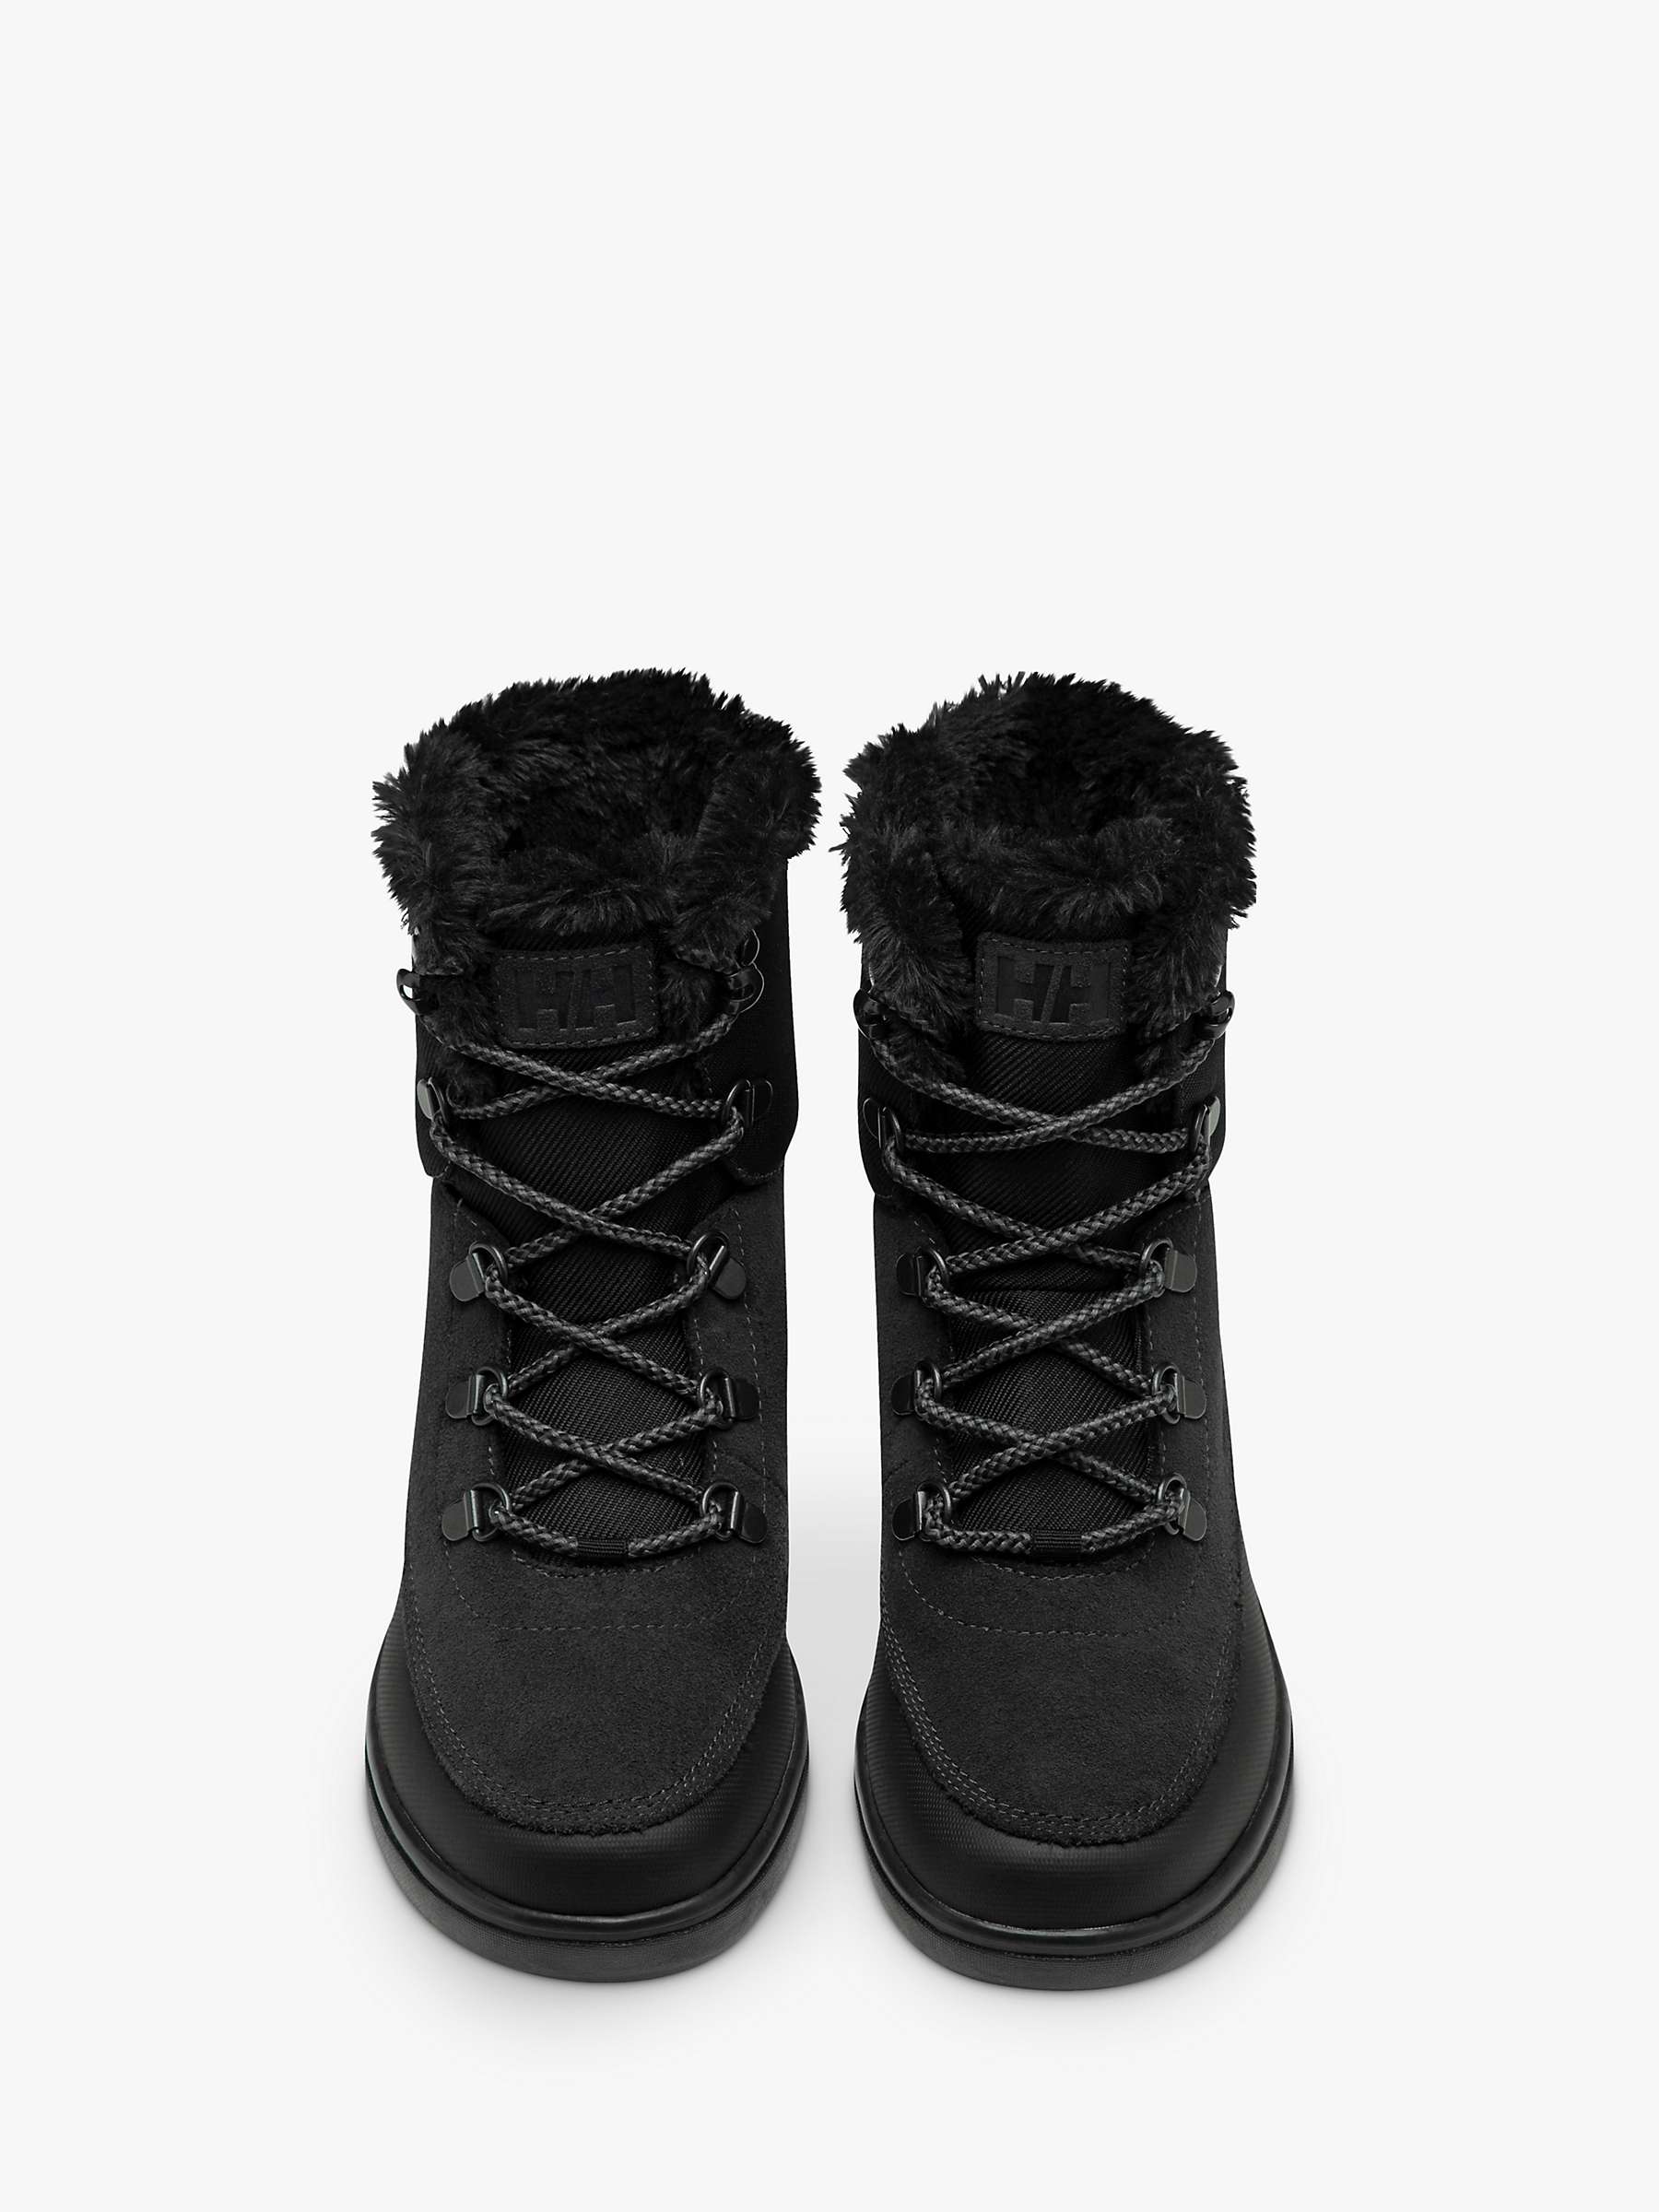 Buy Helly Hansen Sorrento Women's Walking Boots Online at johnlewis.com